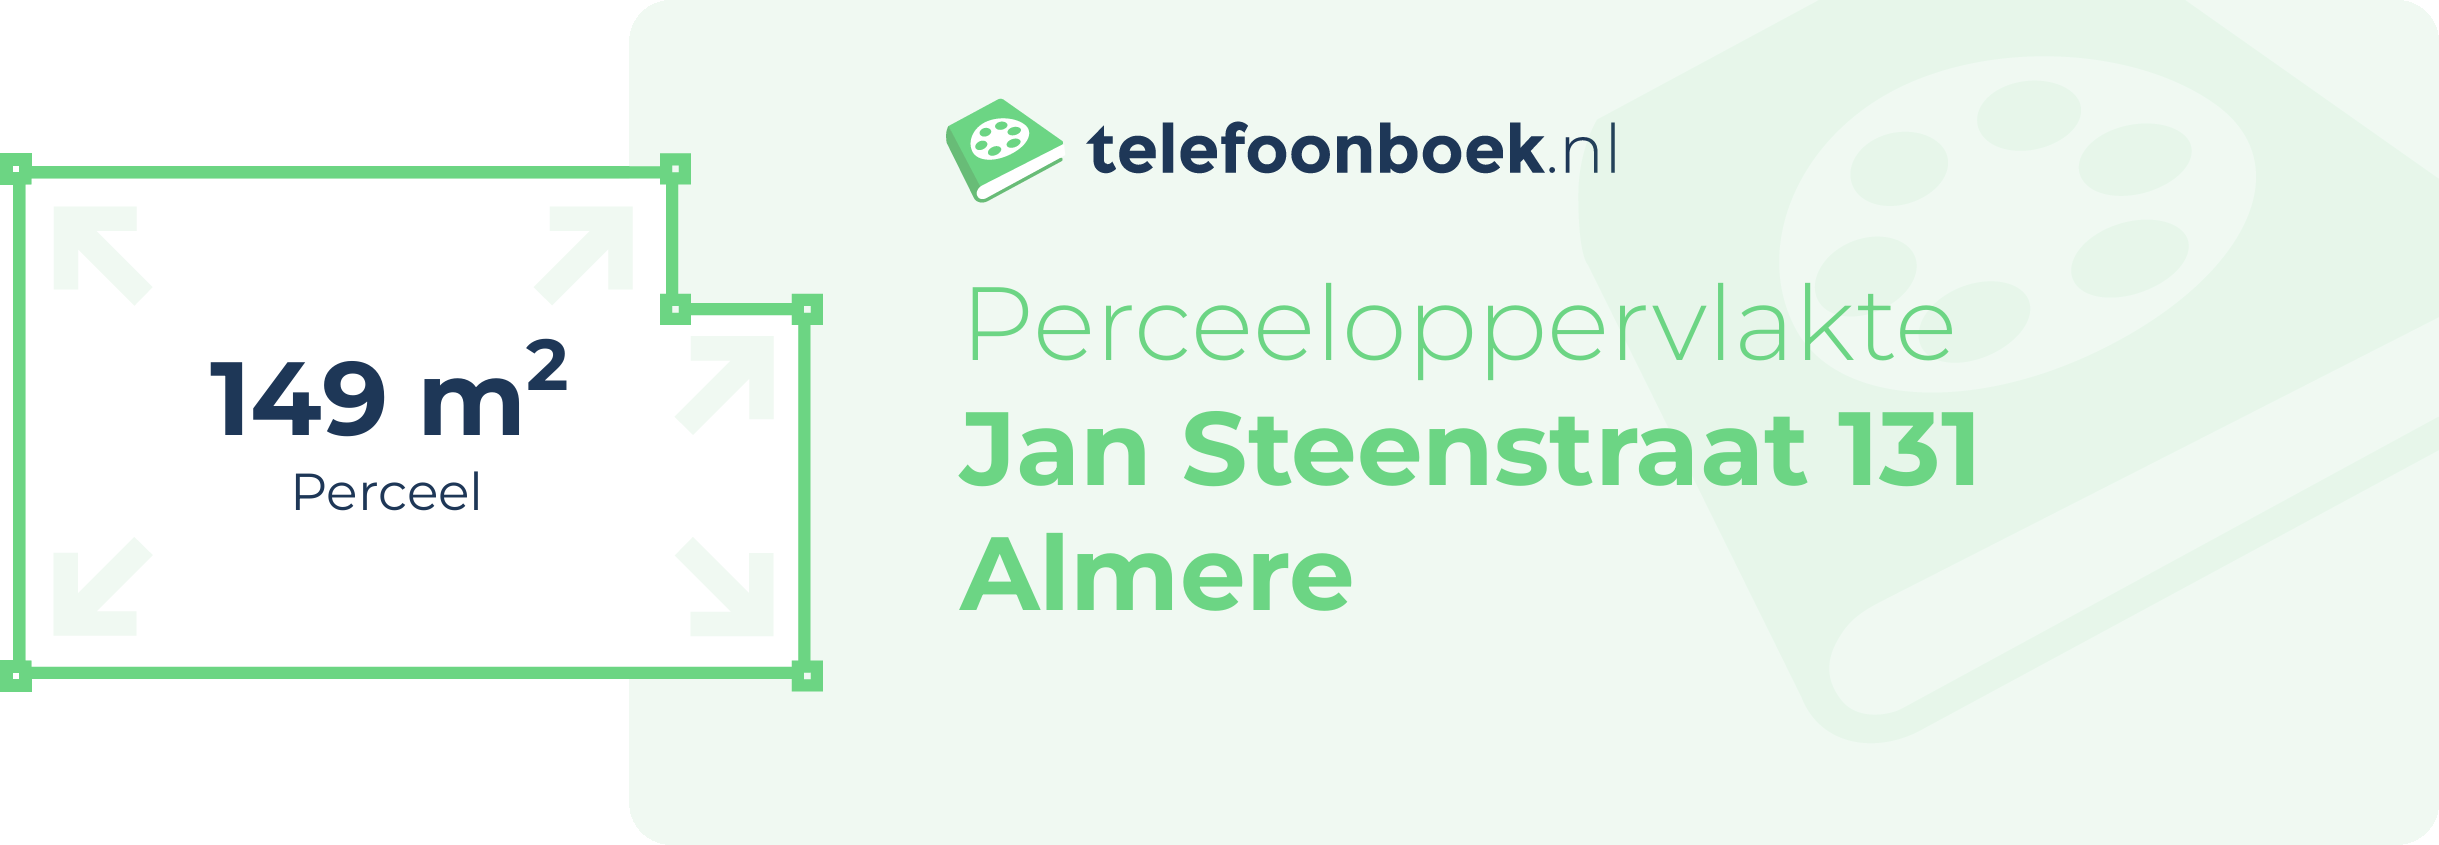 Perceeloppervlakte Jan Steenstraat 131 Almere